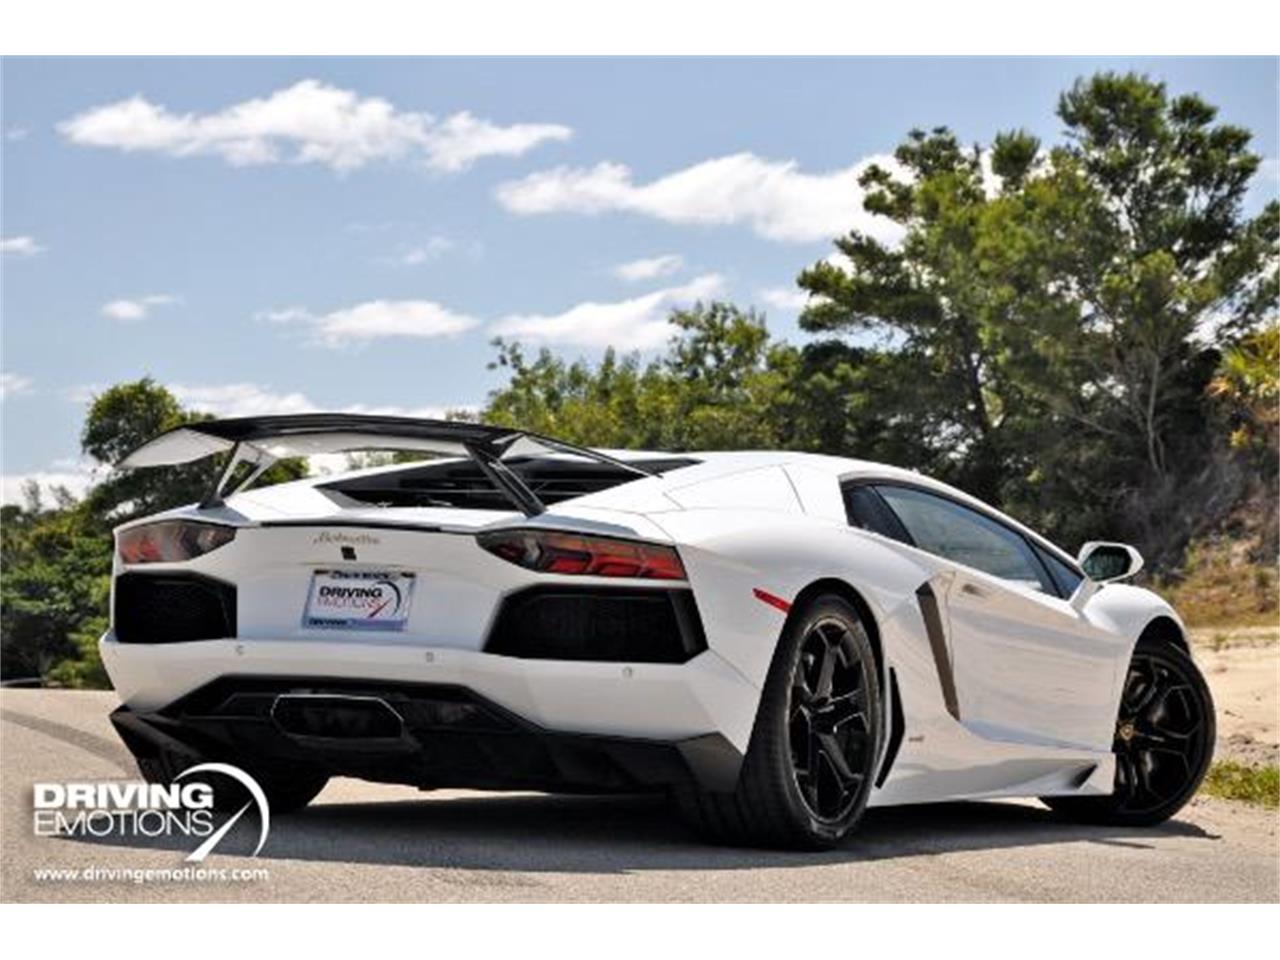 2012 Lamborghini Aventador for sale in West Palm Beach, FL ...